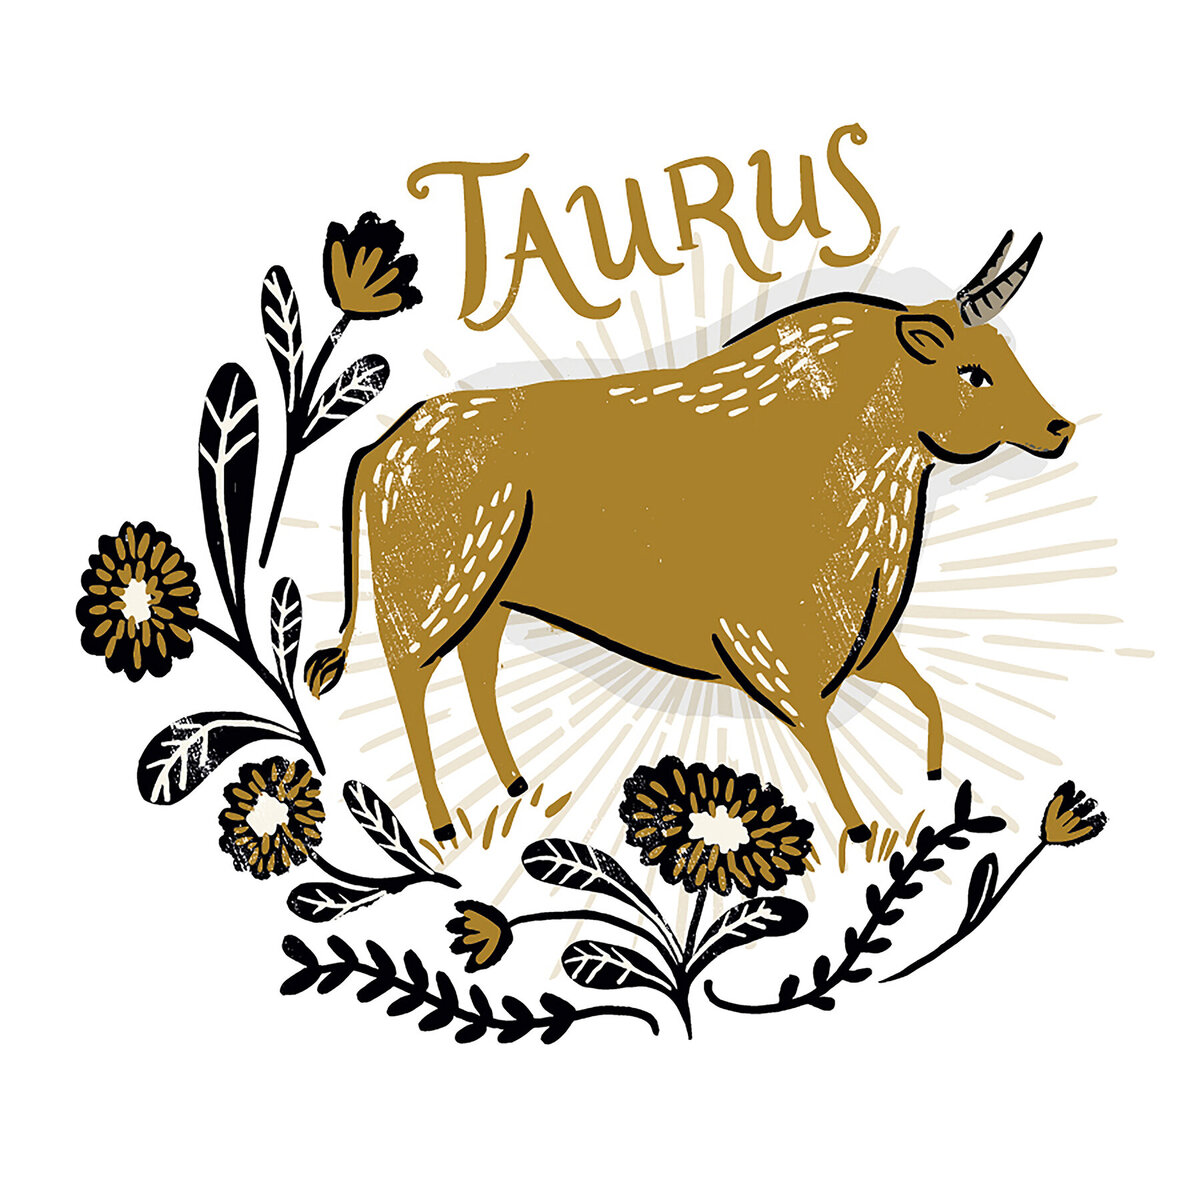 Taurus_RW2-01